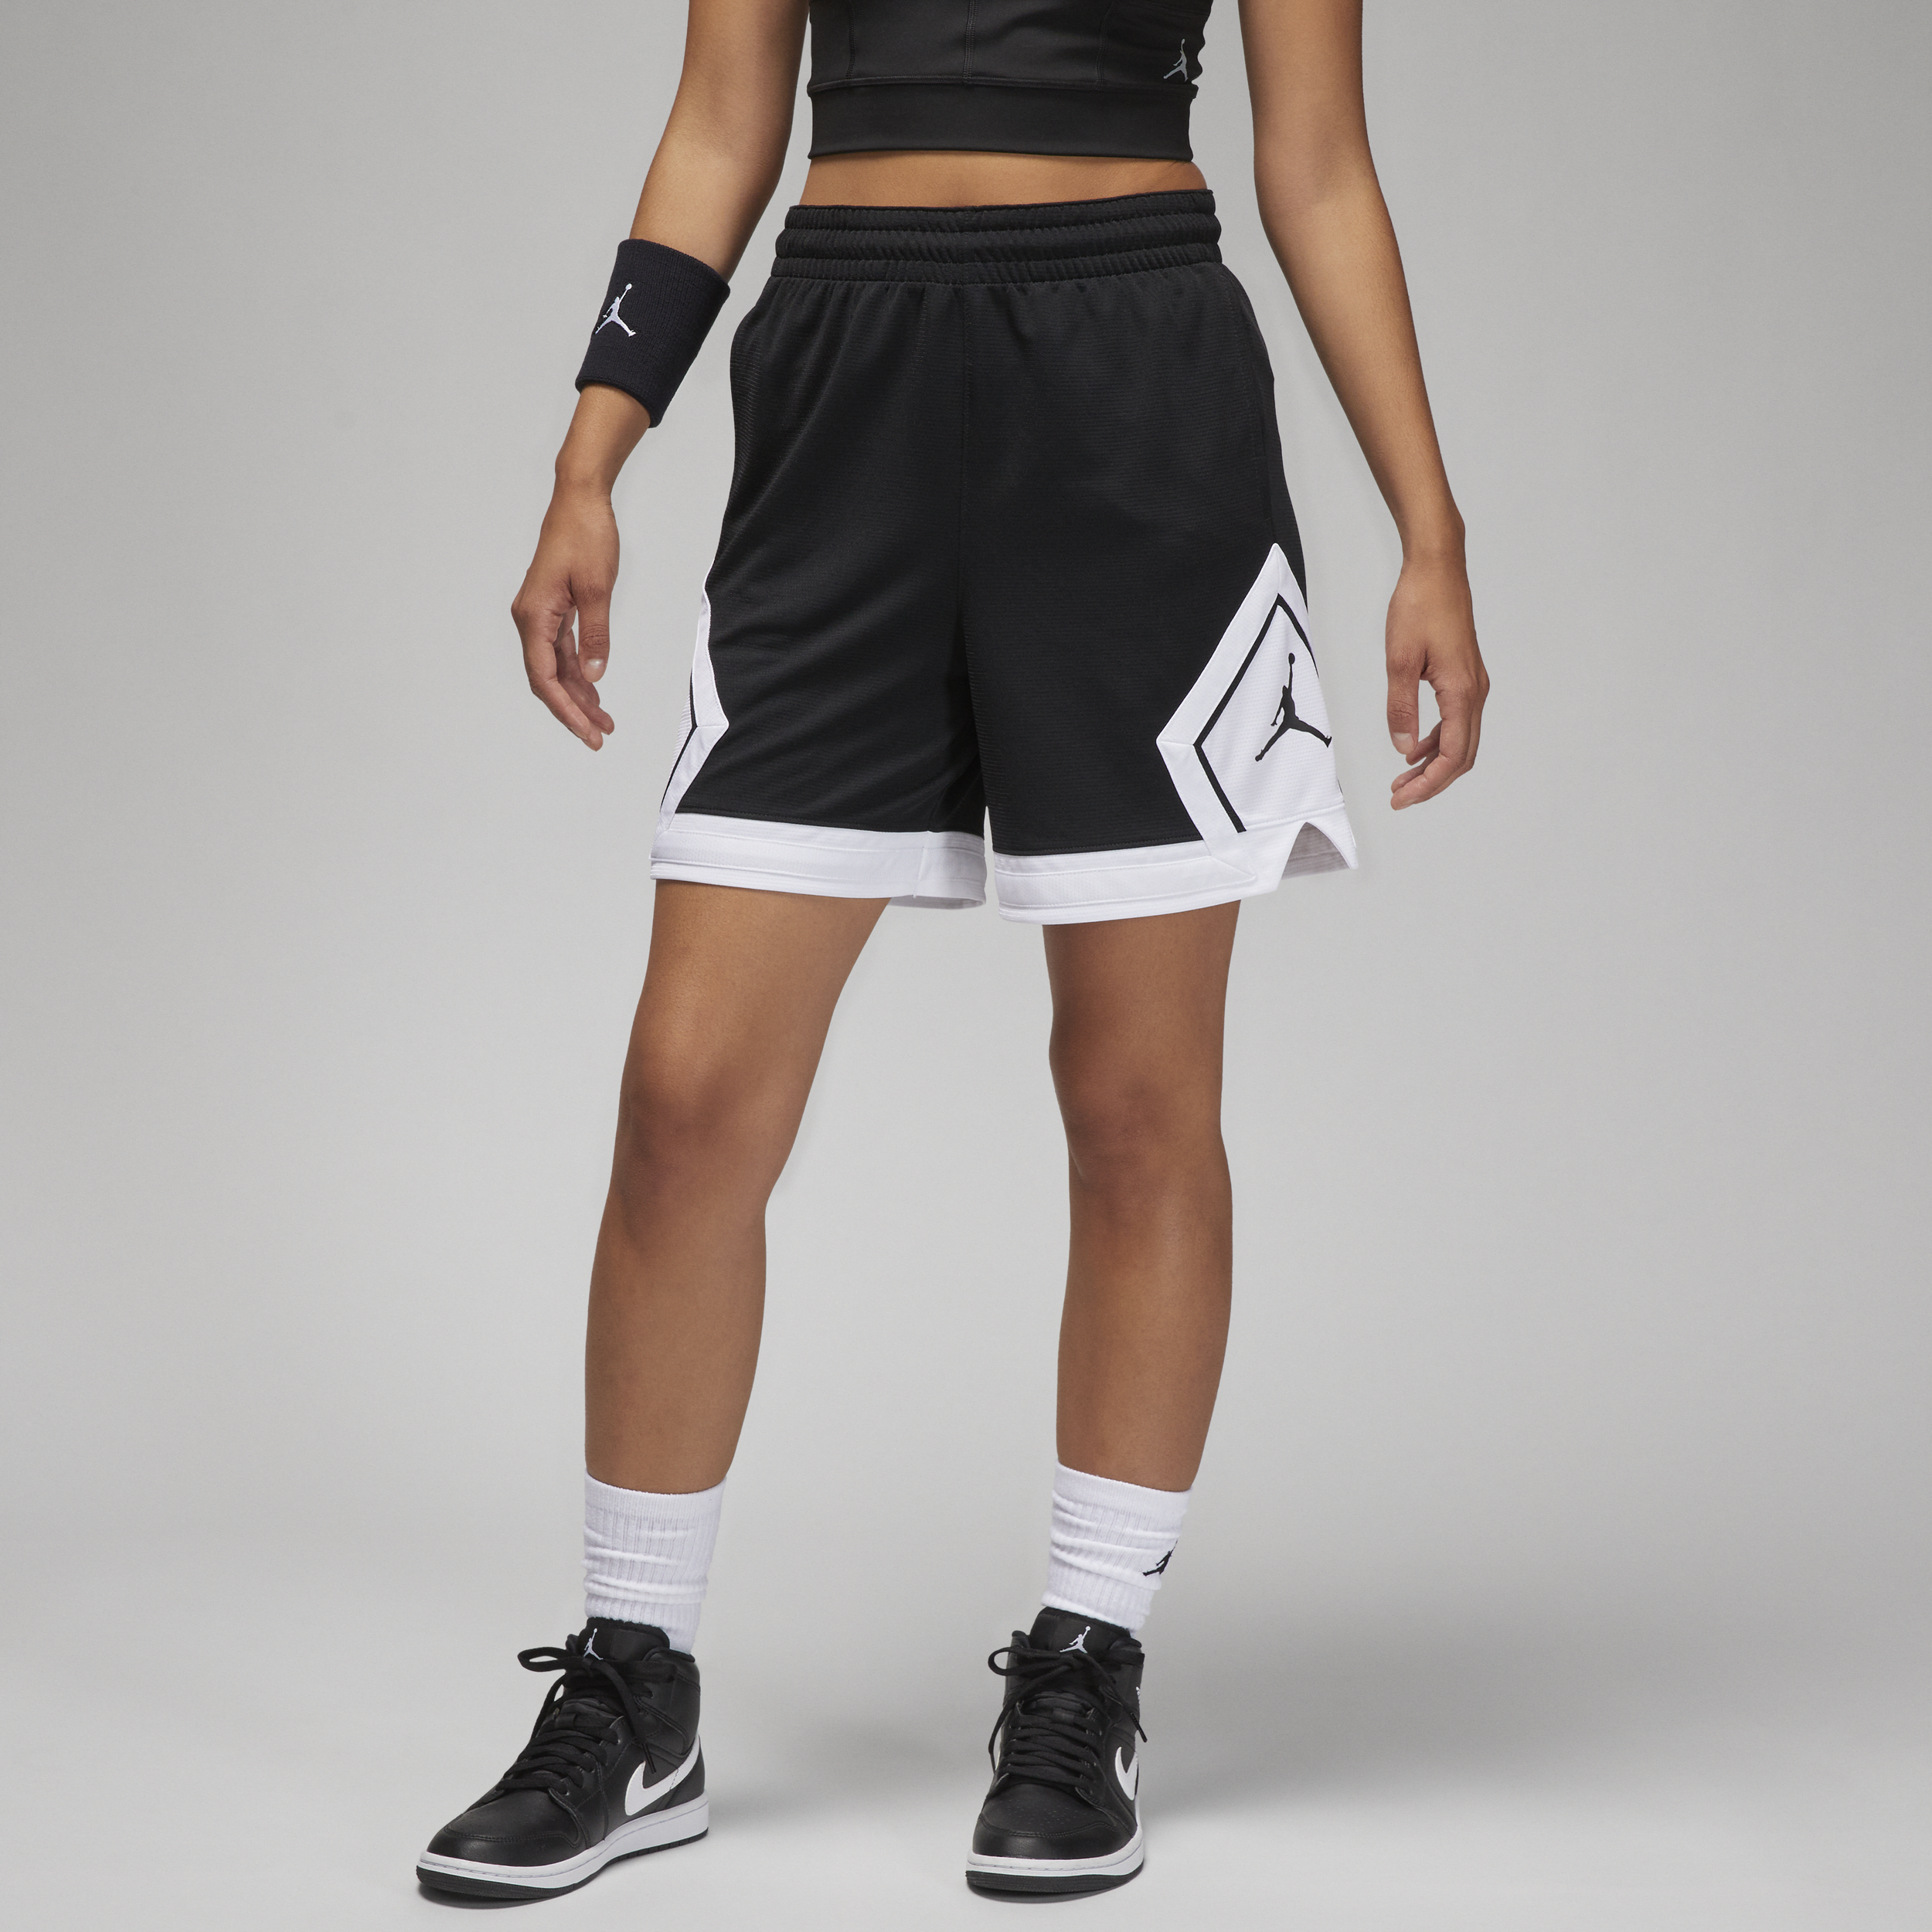 Jordan Sport Diamond-shorts til kvinder - sort